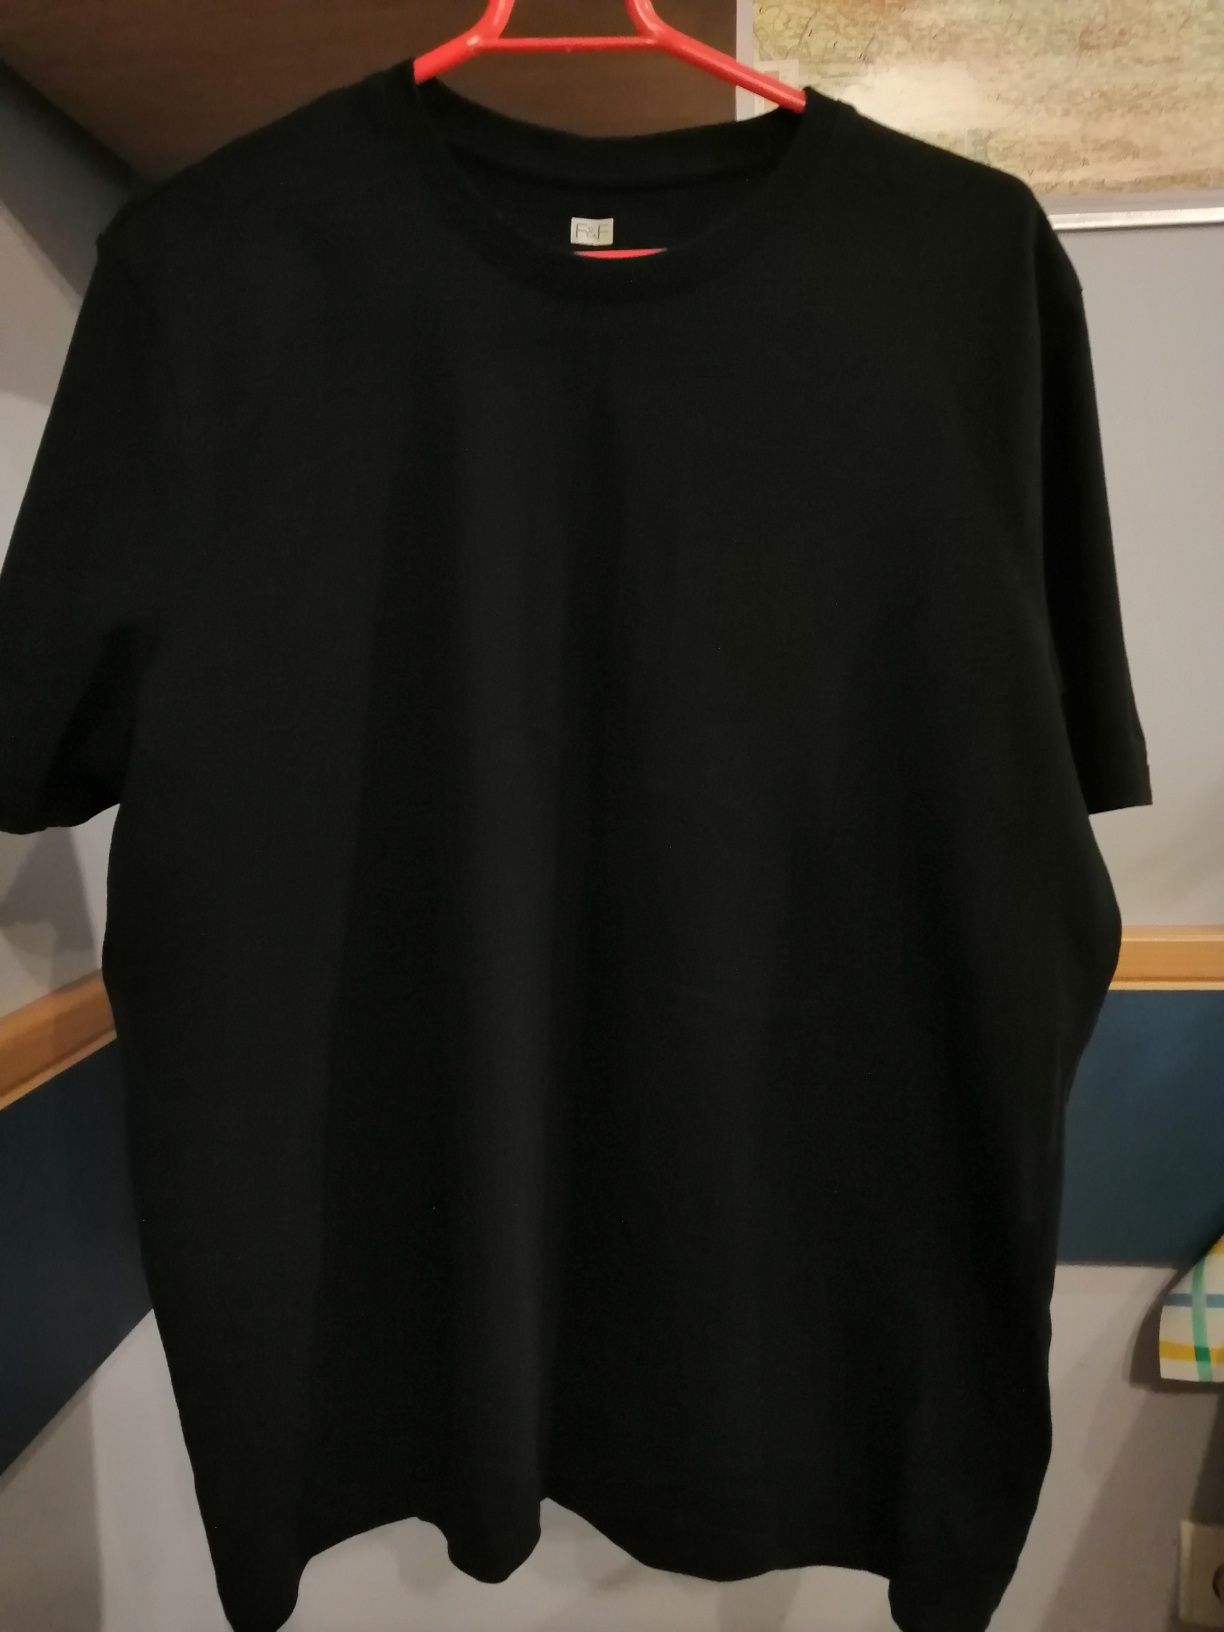 Koszulka męska, młodzieżowa, L, 100% bawełna, t-shirt, czarna